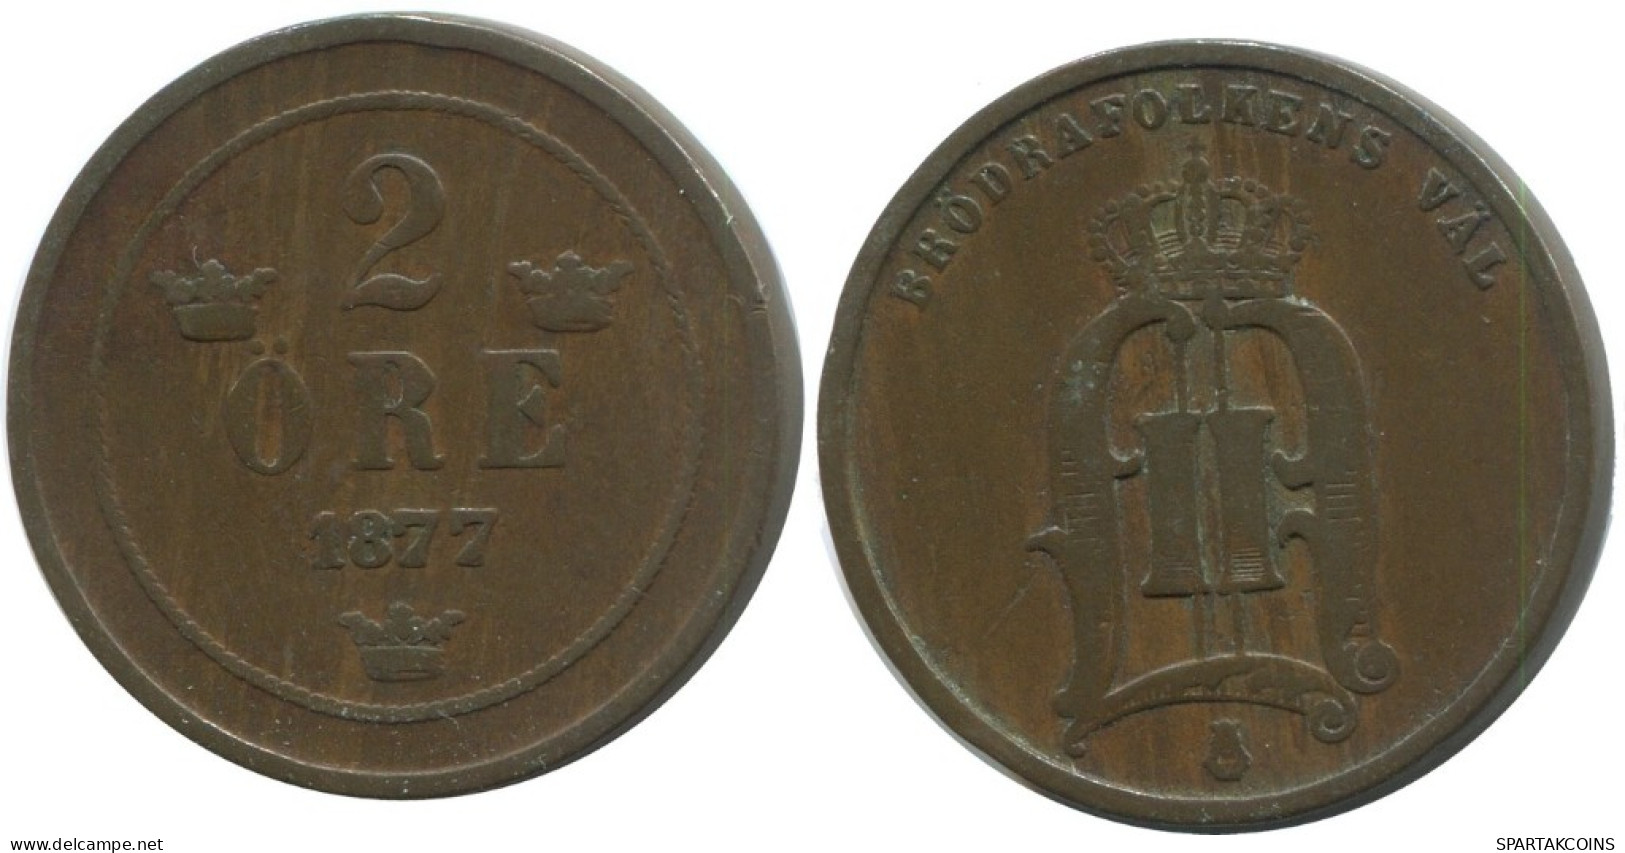 2 ORE 1877 SUECIA SWEDEN Moneda #AC950.2.E.A - Sweden